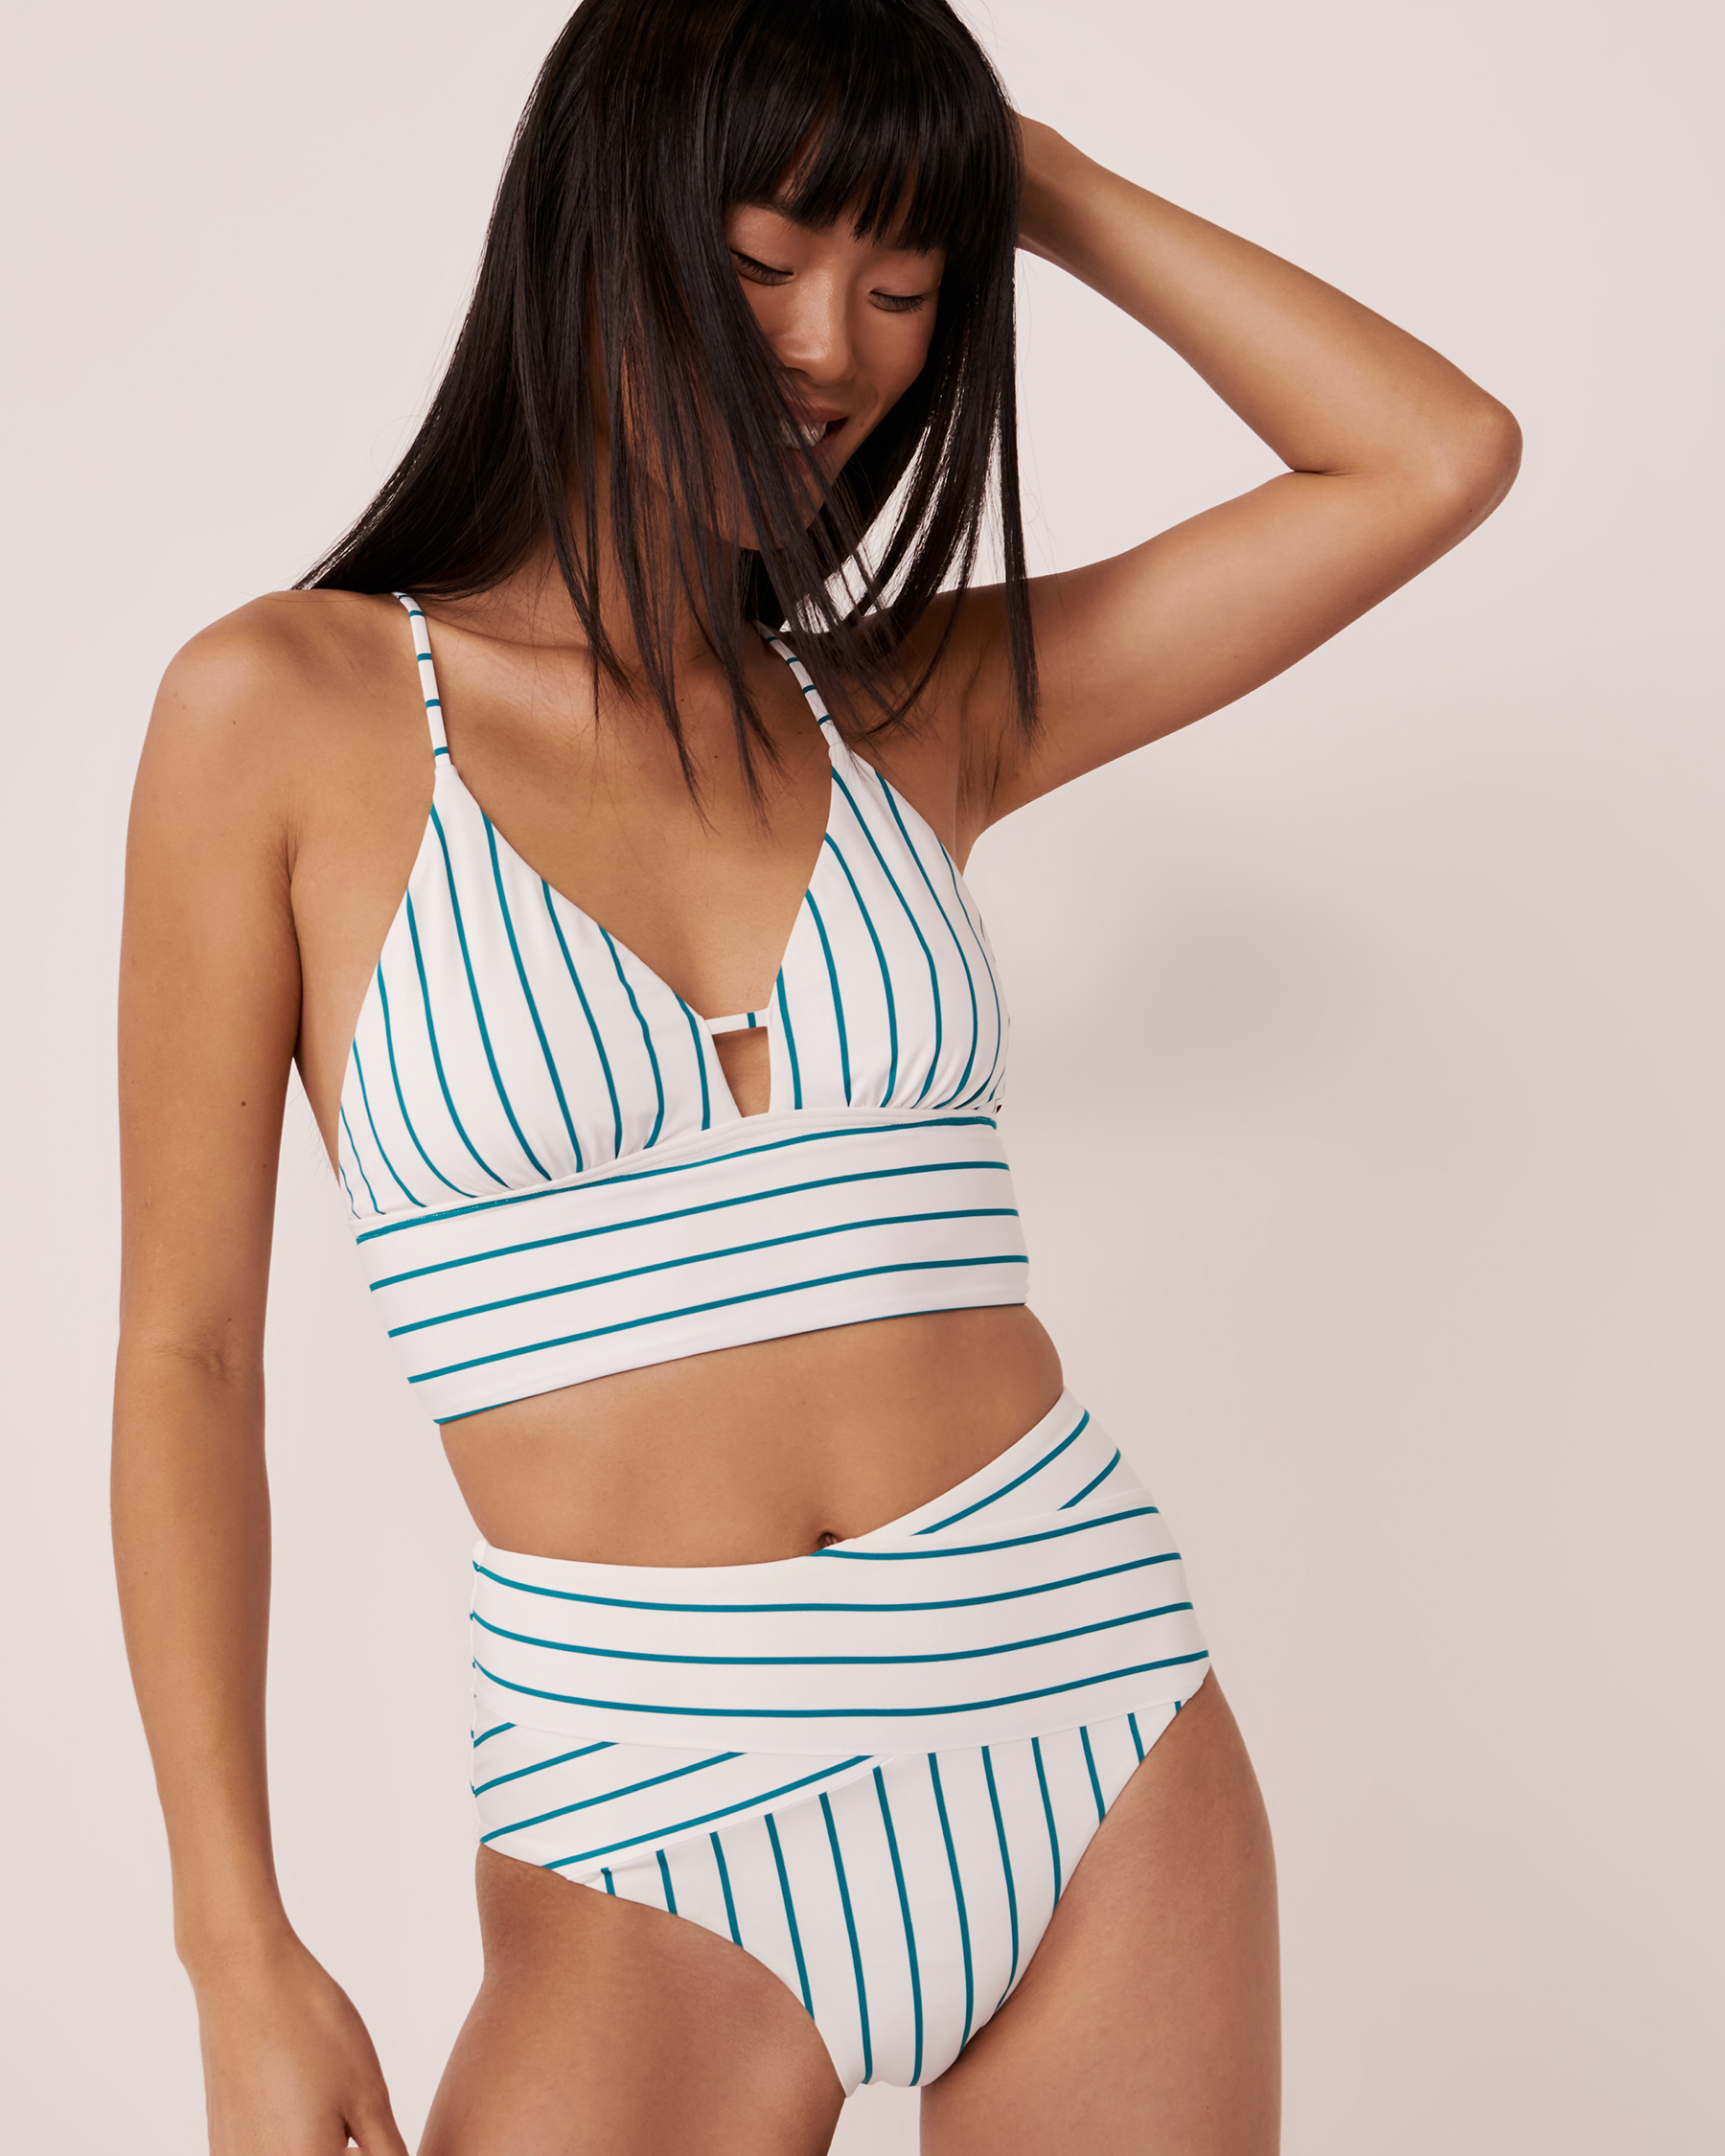 LA VIE EN ROSE AQUA FANFARE STREAKS Recycled Fibers Crossed High Waist Bikini Bottom Stripes 70300347 - View6